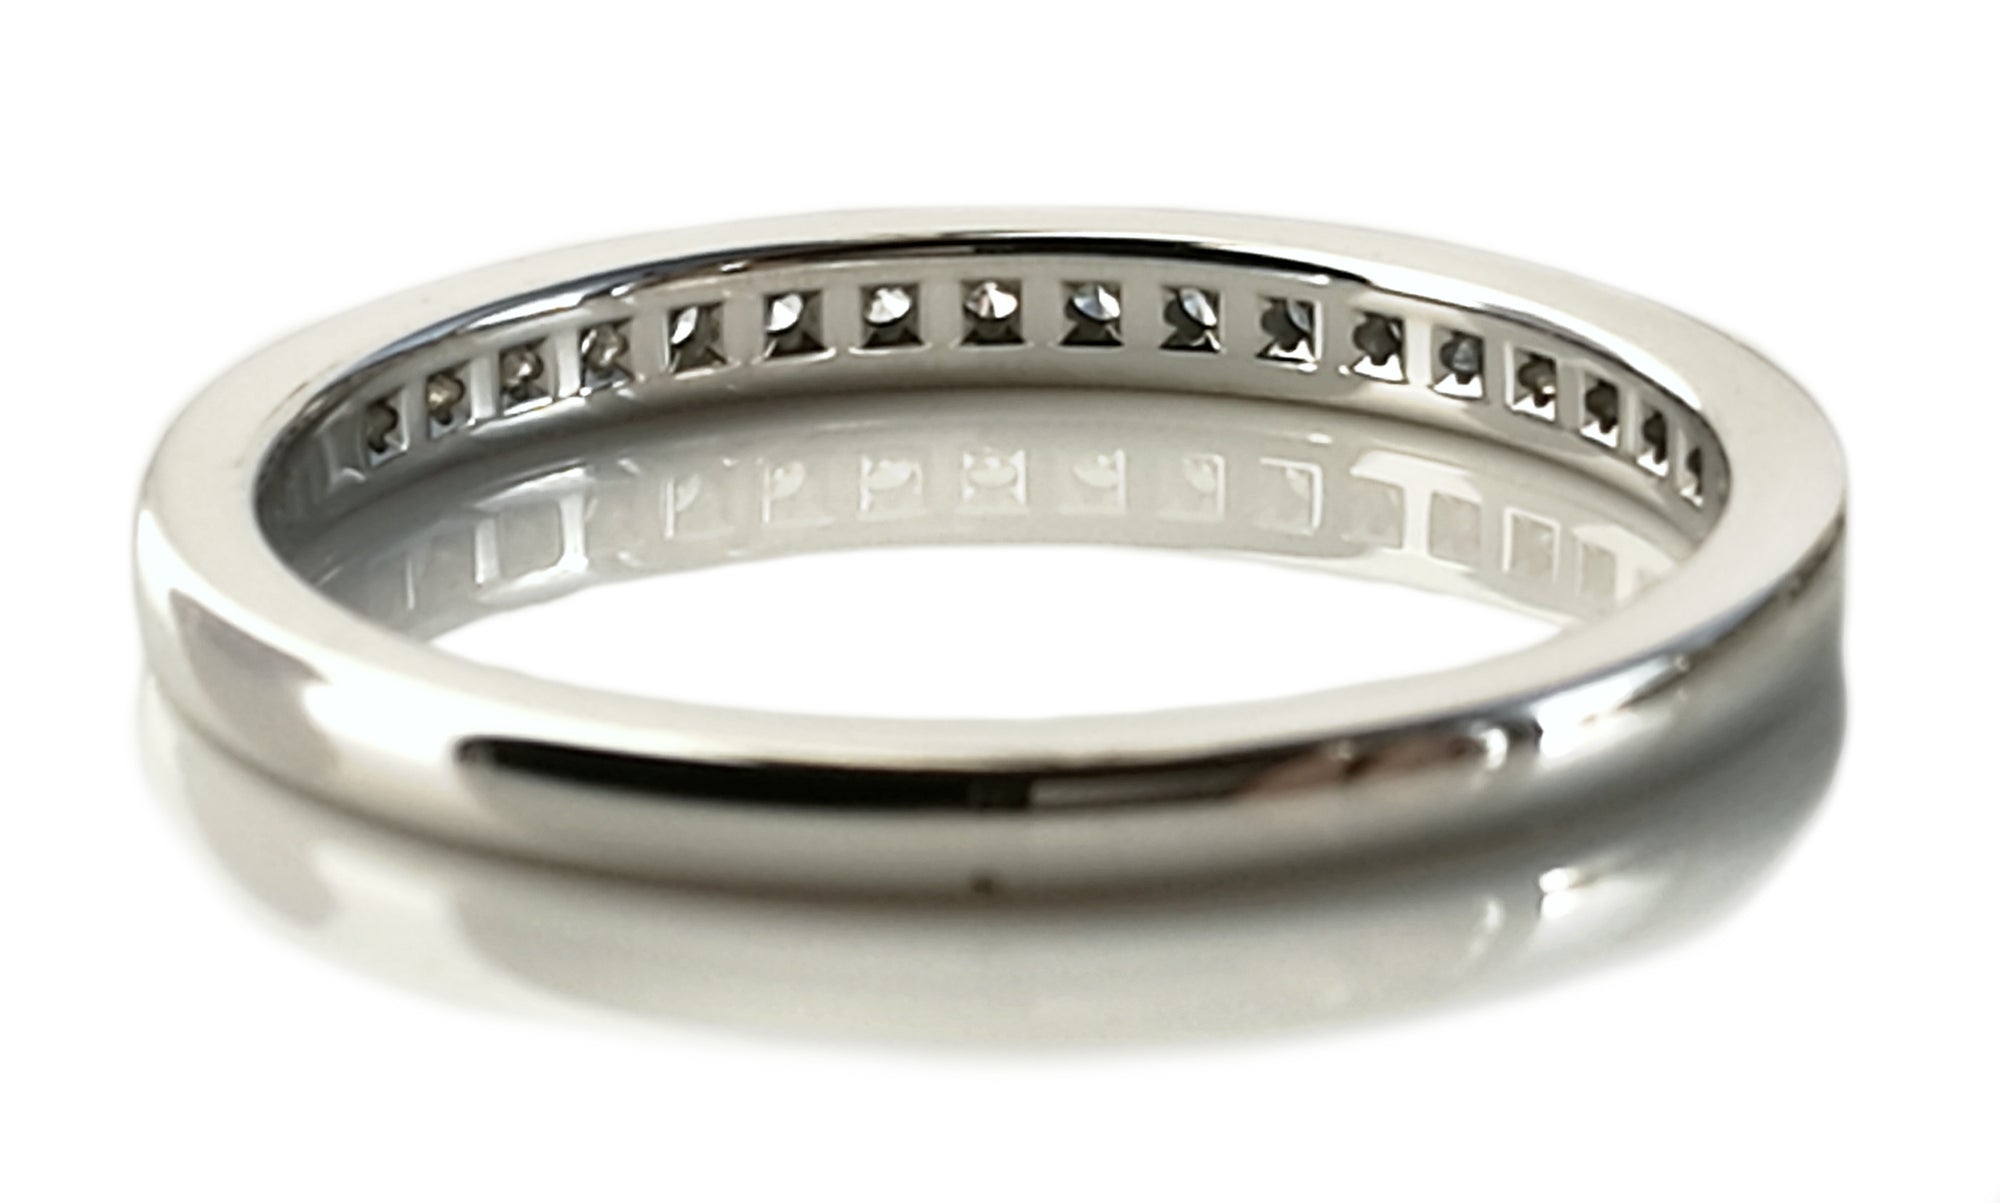 Tiffany & Co. Diamond 2mm 0.17ct Eternity Wedding Band Ring, Size O